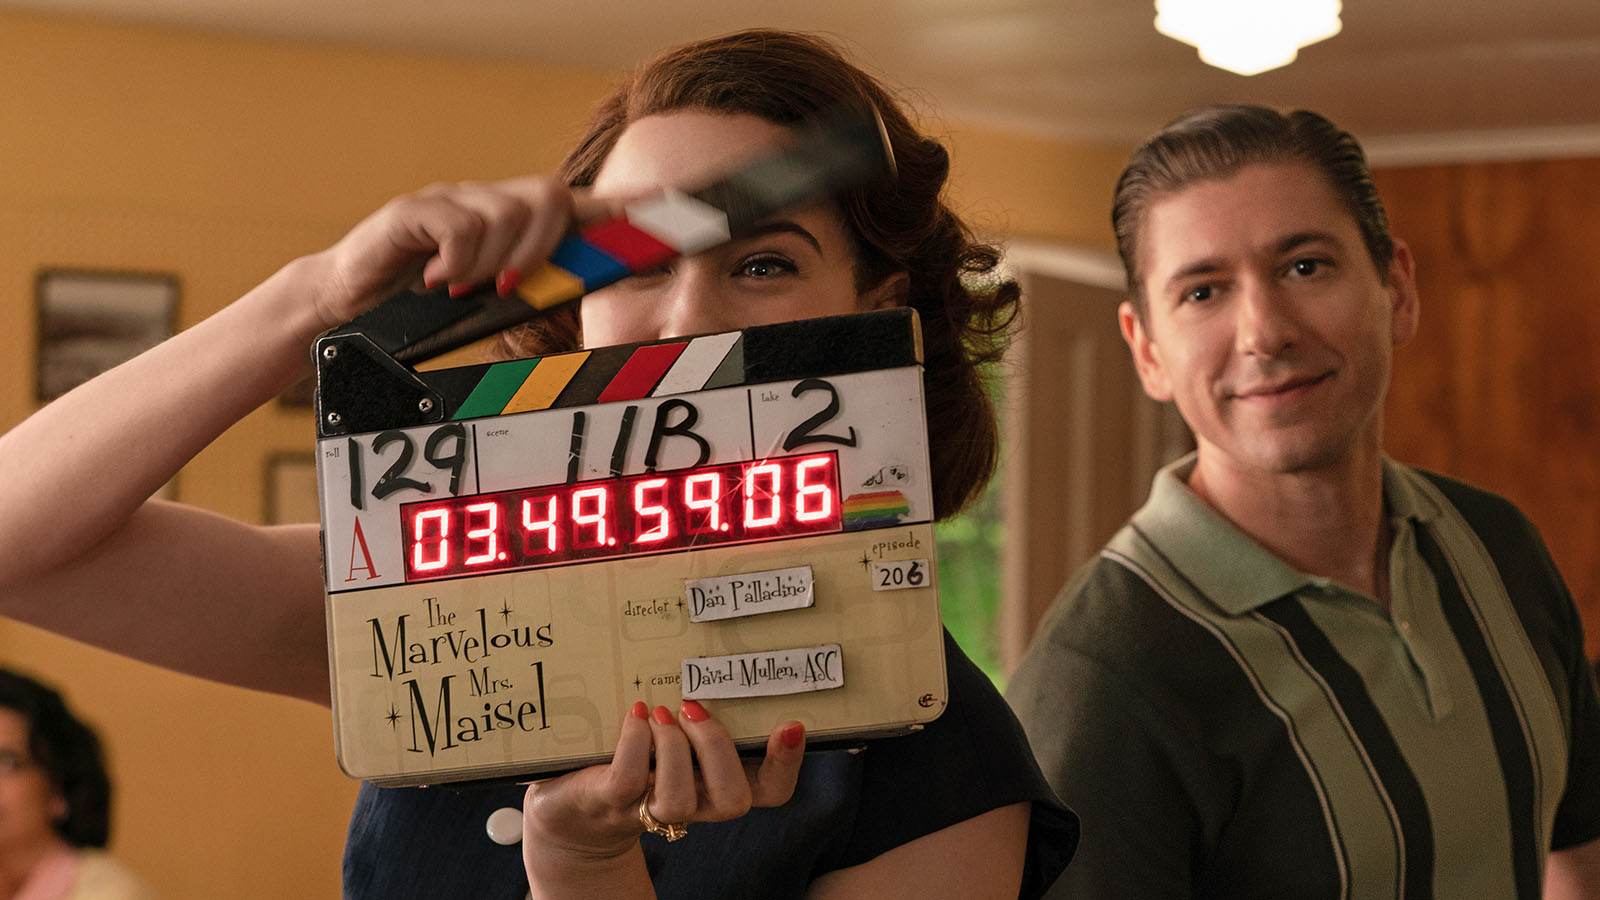 Rachel Brosnahan and Michael Zegan (Midge and Joel Maisel) with the slate for episode 206 of The Marvelous Mrs. Maisel. Image © Amazon Studios